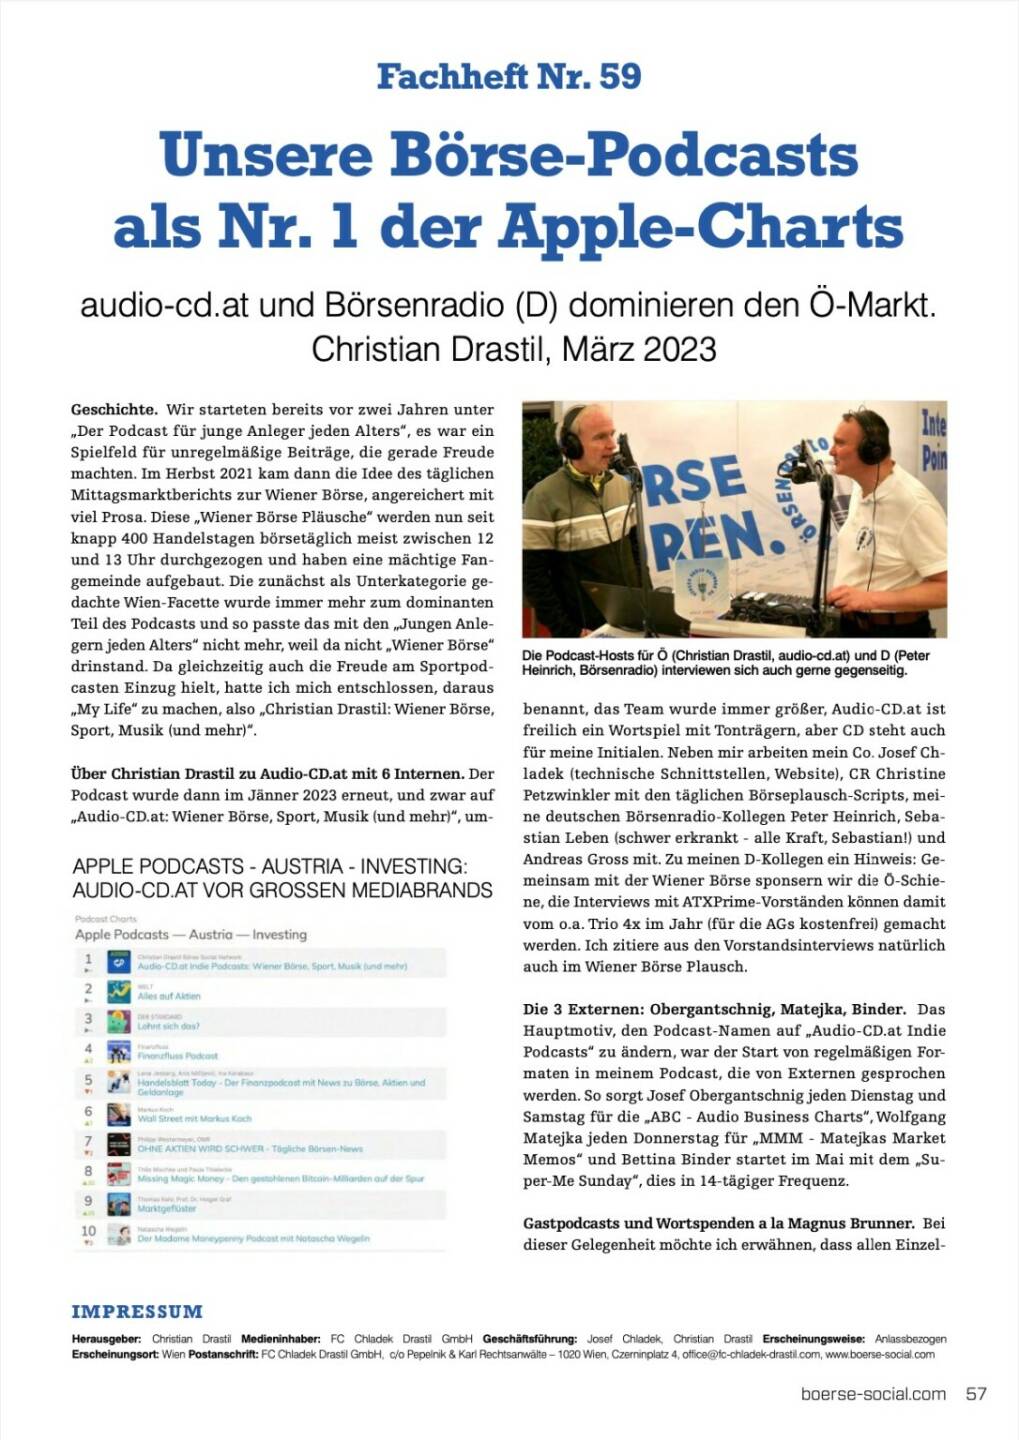 Fachheft Nr. 59 - Unsere Börse-Podcasts als Nr. 1 der Apple-Charts